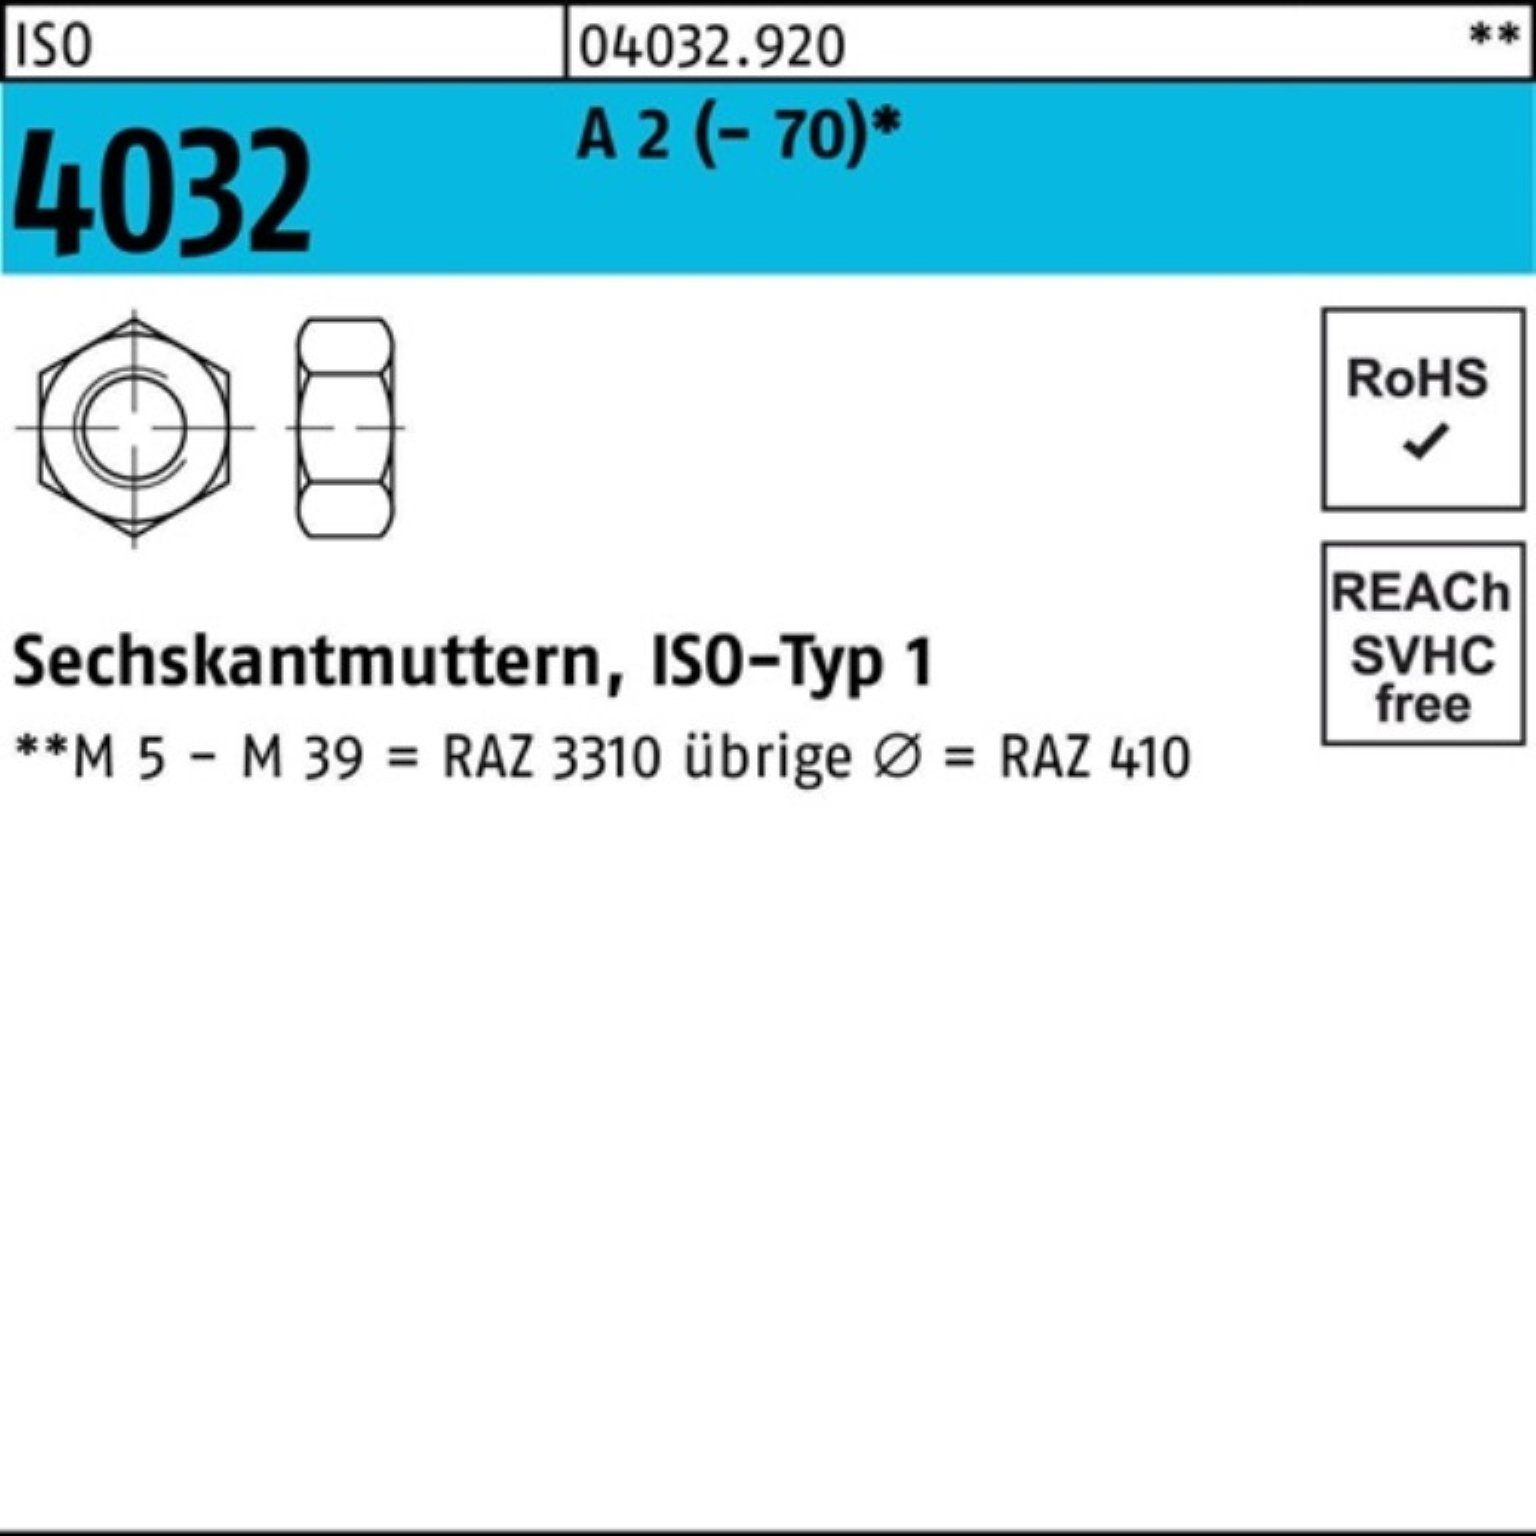 Bufab Muttern 1000er Pack Sechskantmutter ISO 4032 M6 A 2 (70) 1000 Stück ISO 403